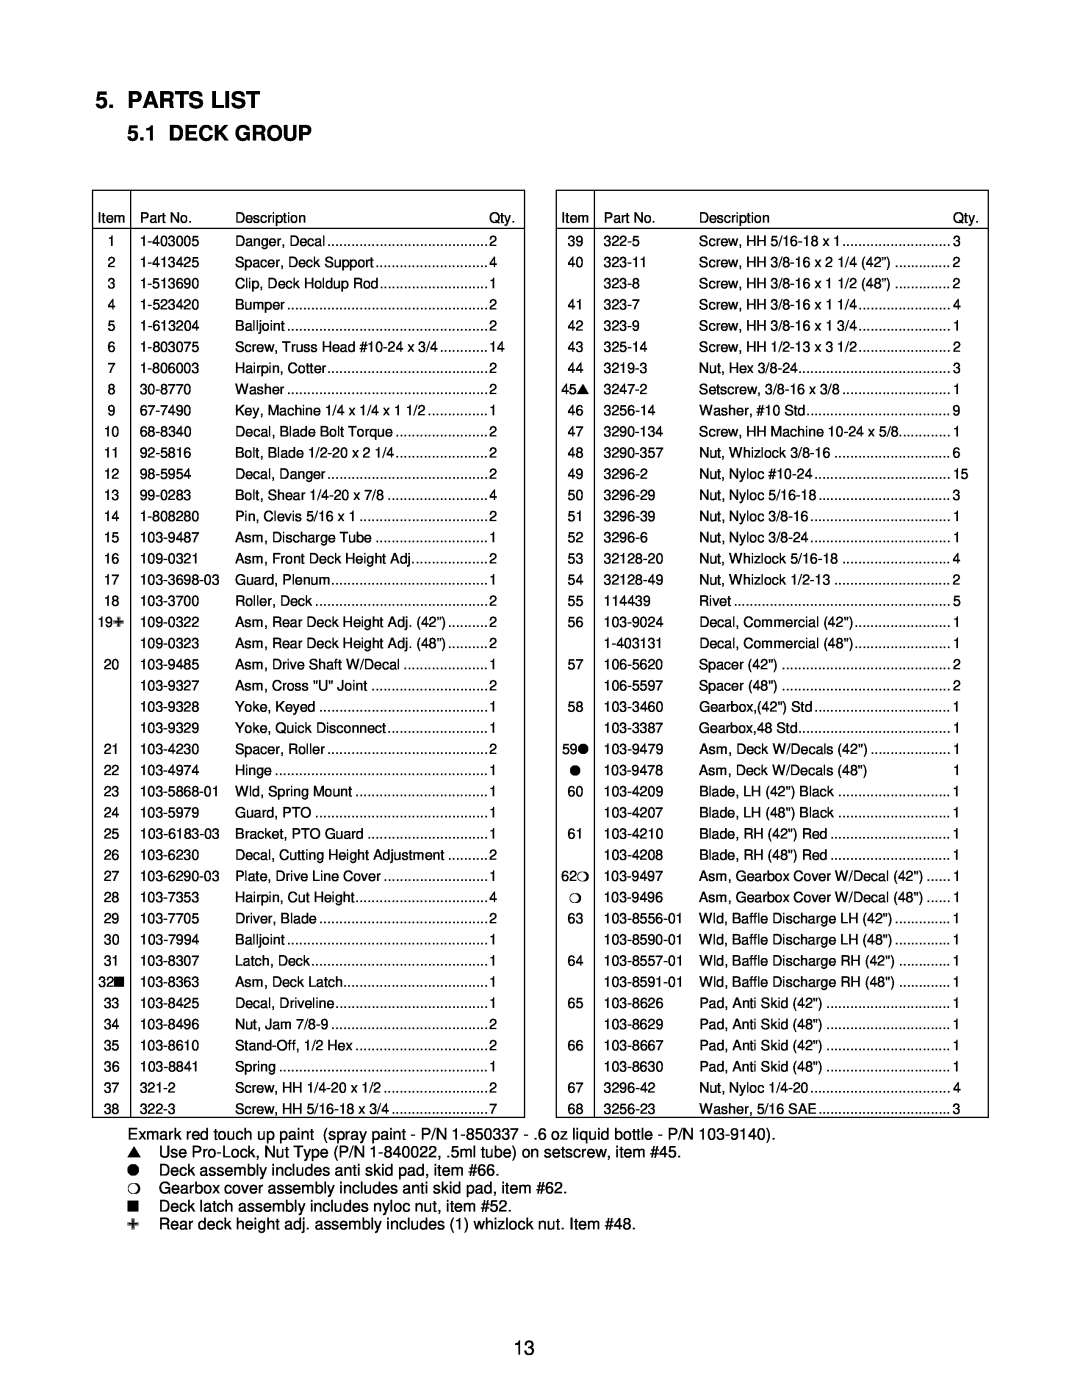 Exmark Cd42cd, Cd48cd, CD42CD manual Parts List, Deck Group 